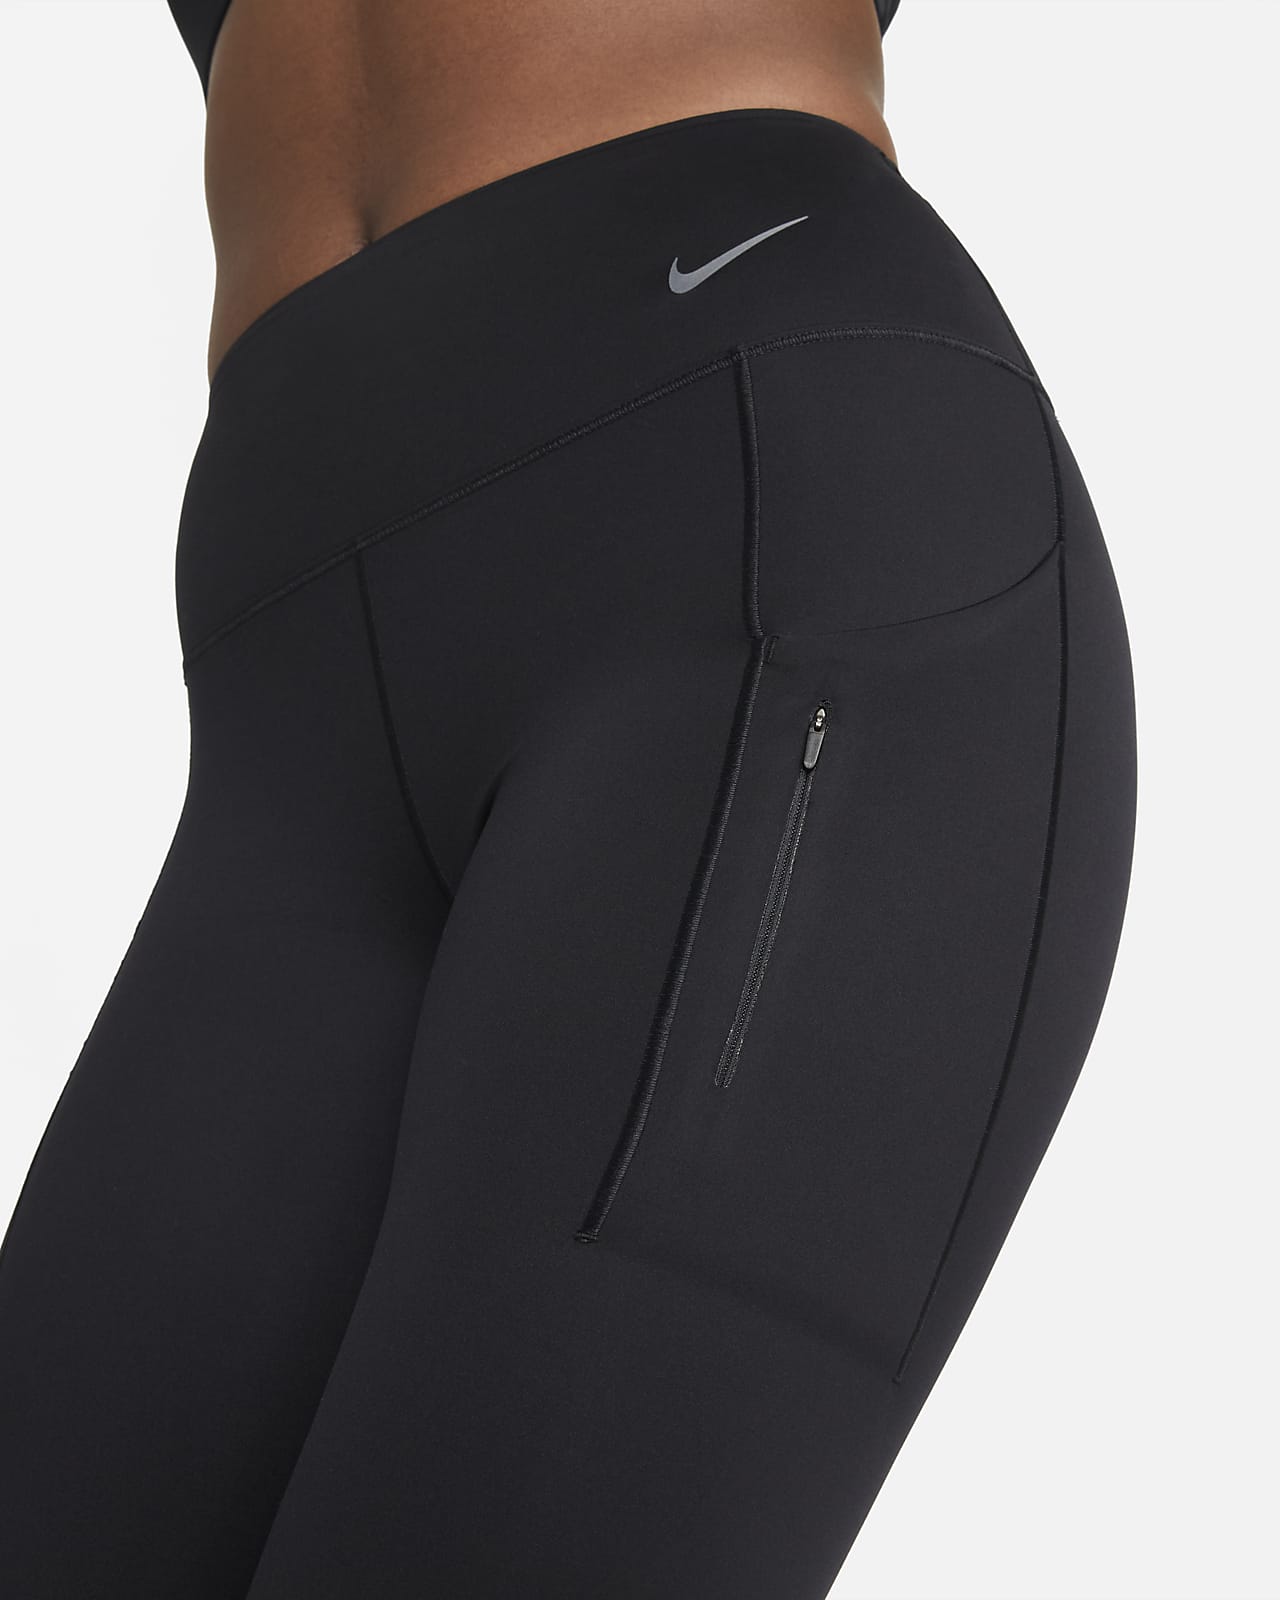 Nike Dri-Fit Leggings Women's Small Black Ankle Inside Pocket Mesh Back  Yoga Gym : r/gym_apparel_for_women